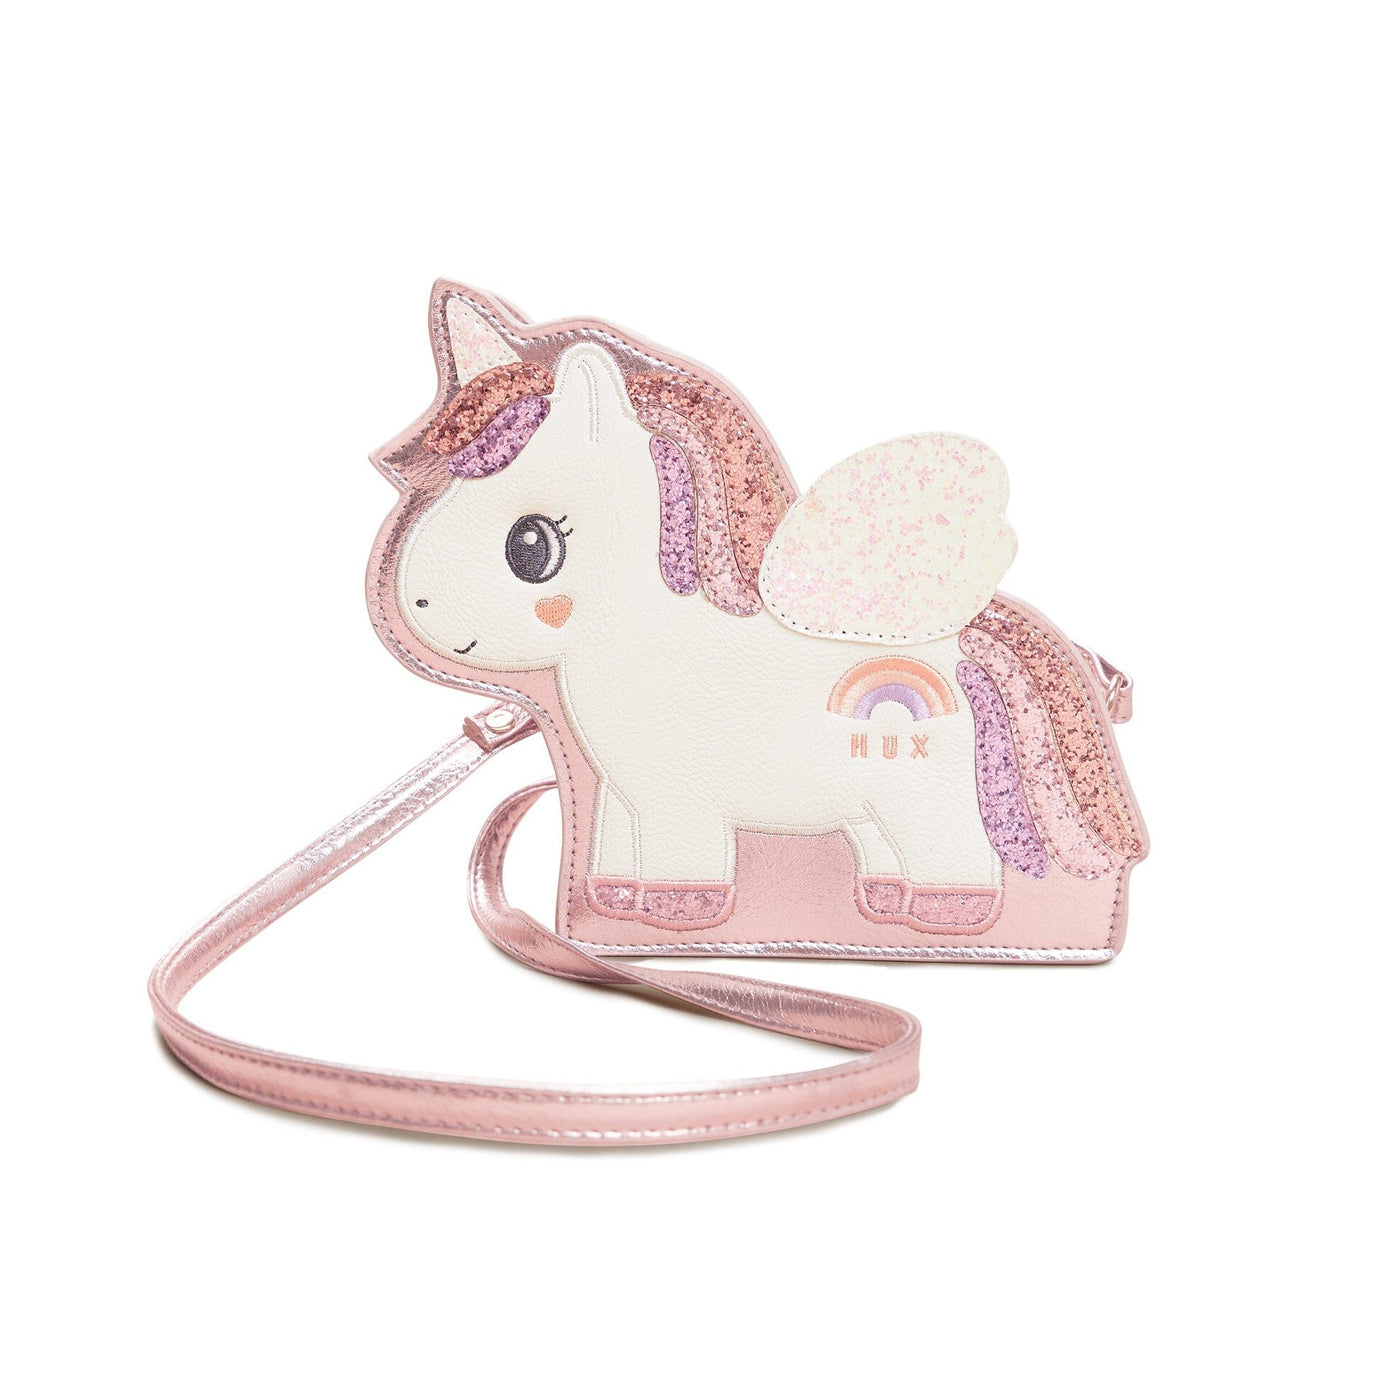 Huxbaby Glitter Unicorn Handbag HB8028W24 Handbag Huxbaby 